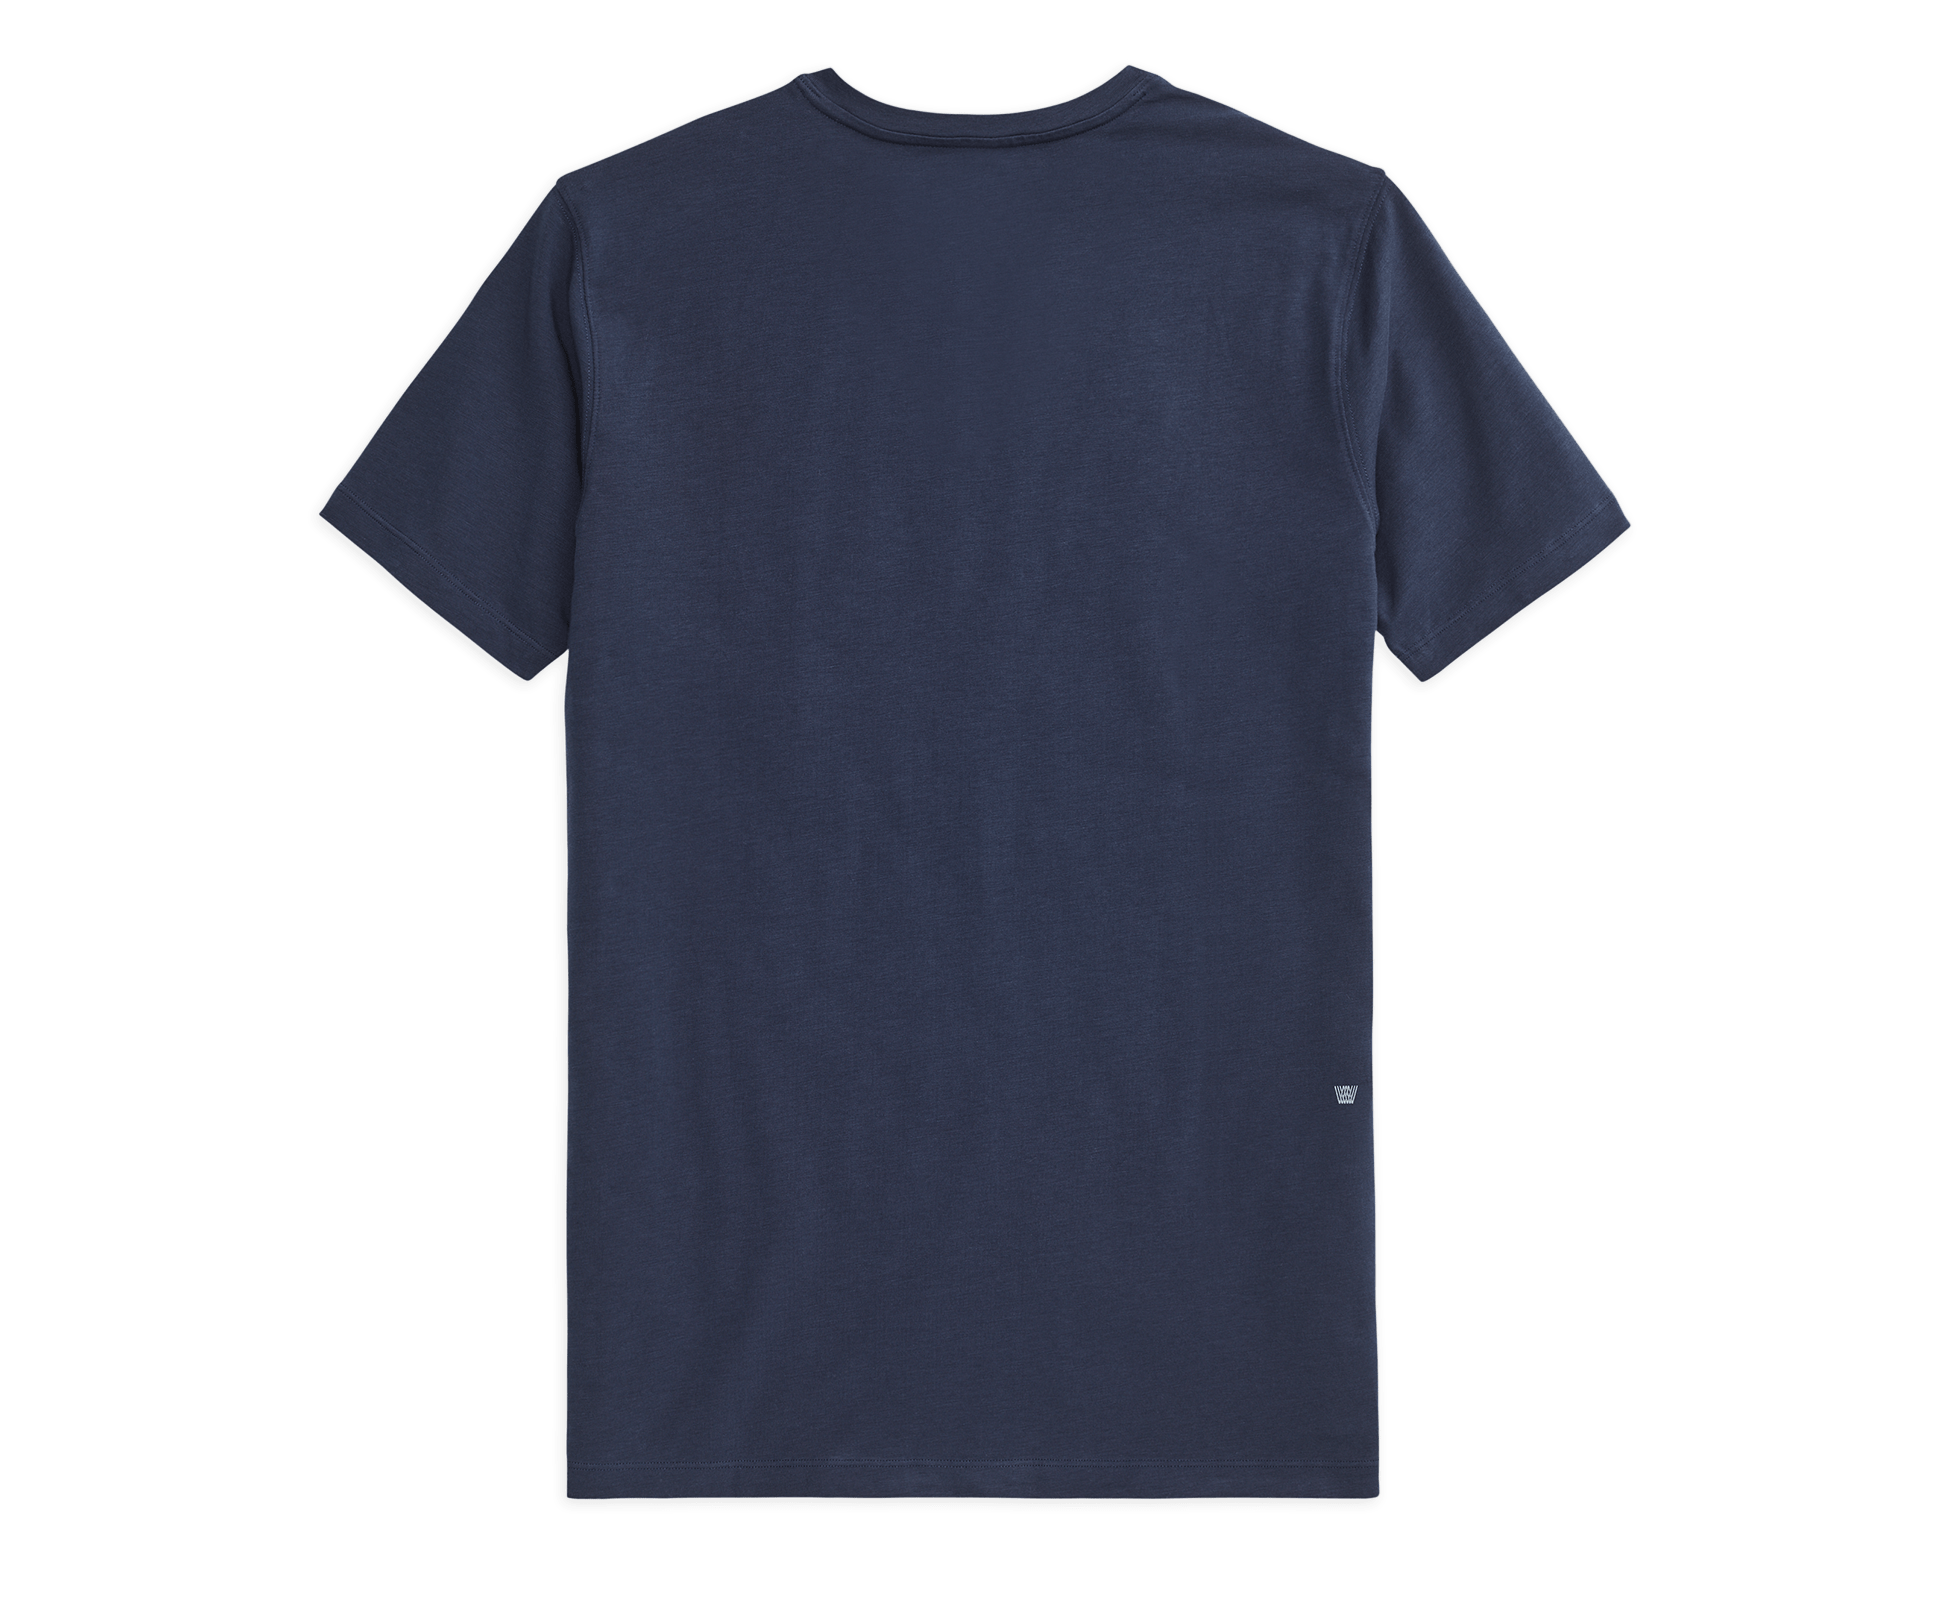 Crew Neck Long Sleeve T Shirt - Men - Ready-to-Wear